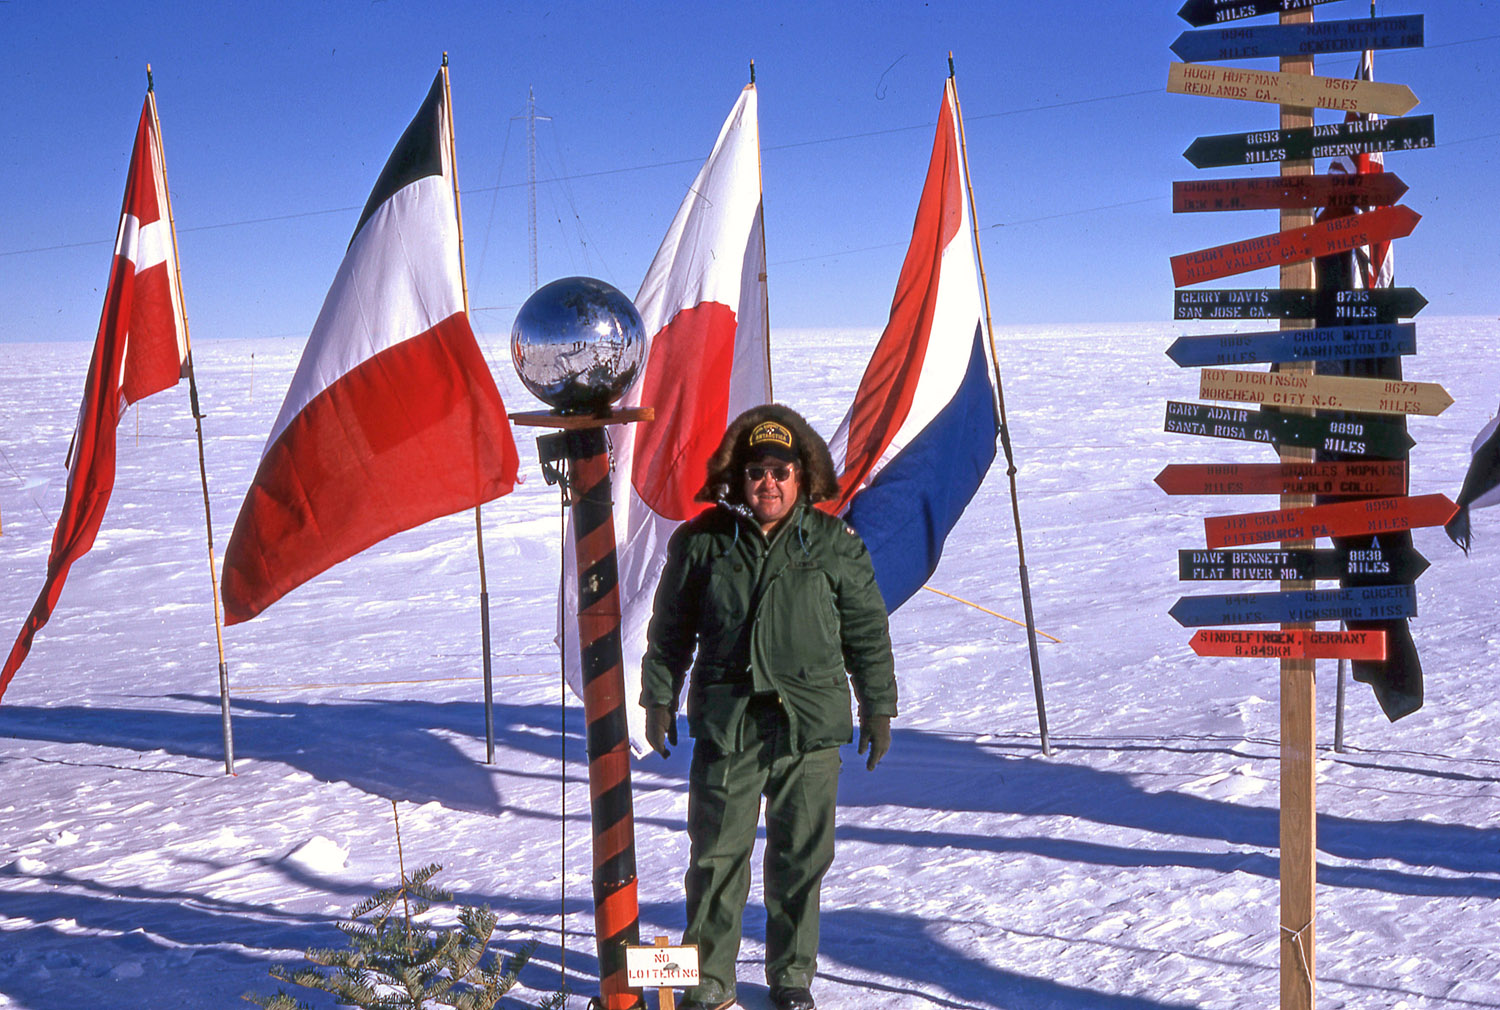 South Pole Station, Antarctica